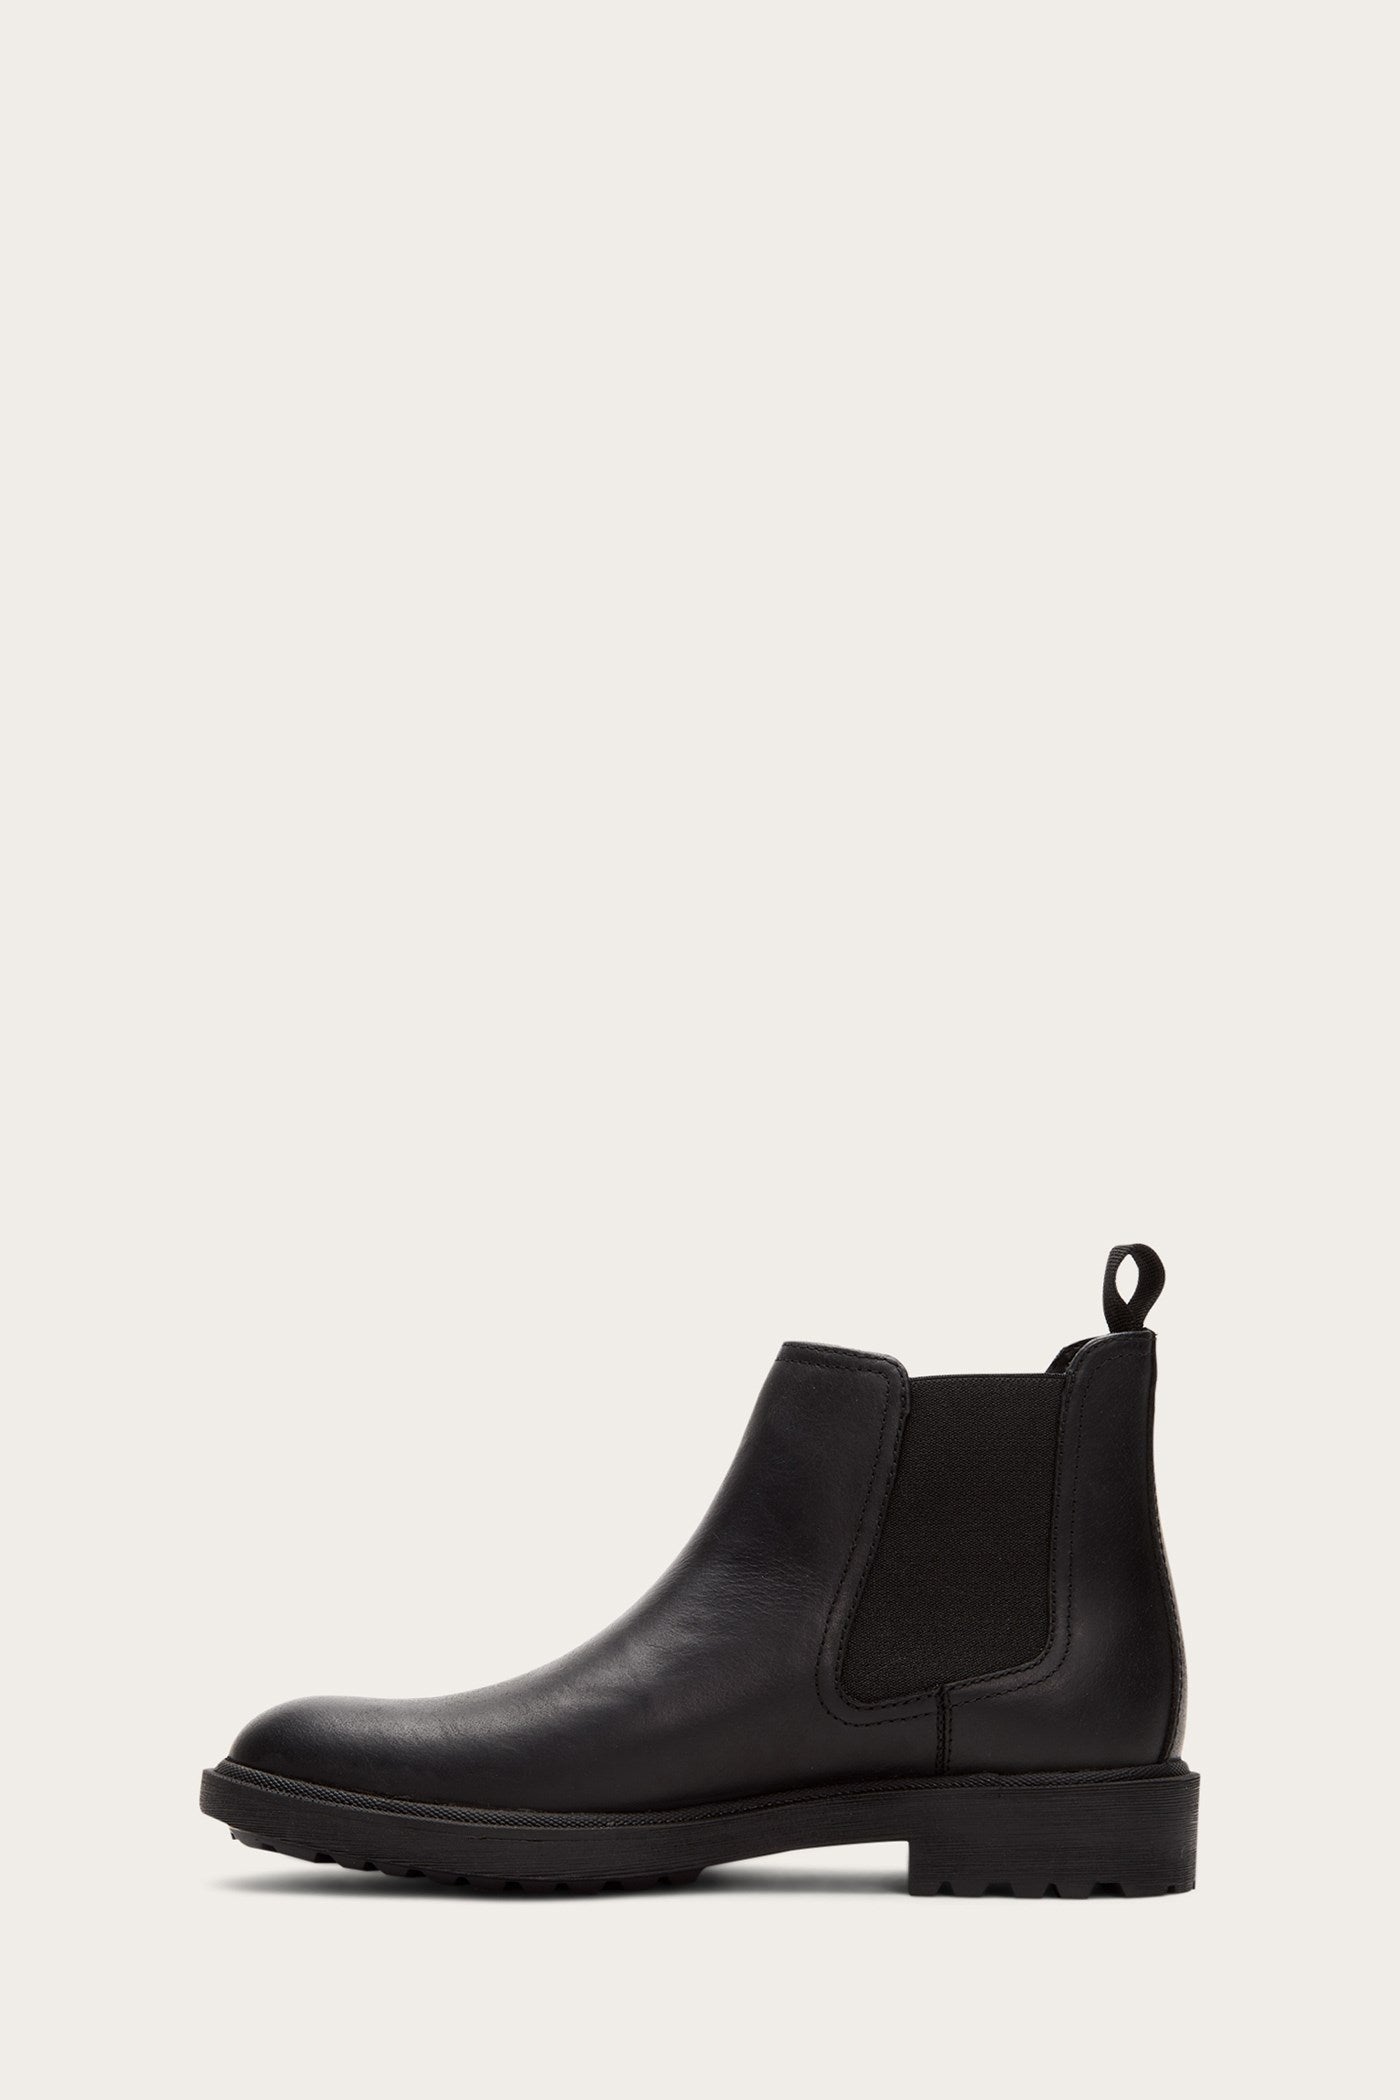 frye black chelsea boots